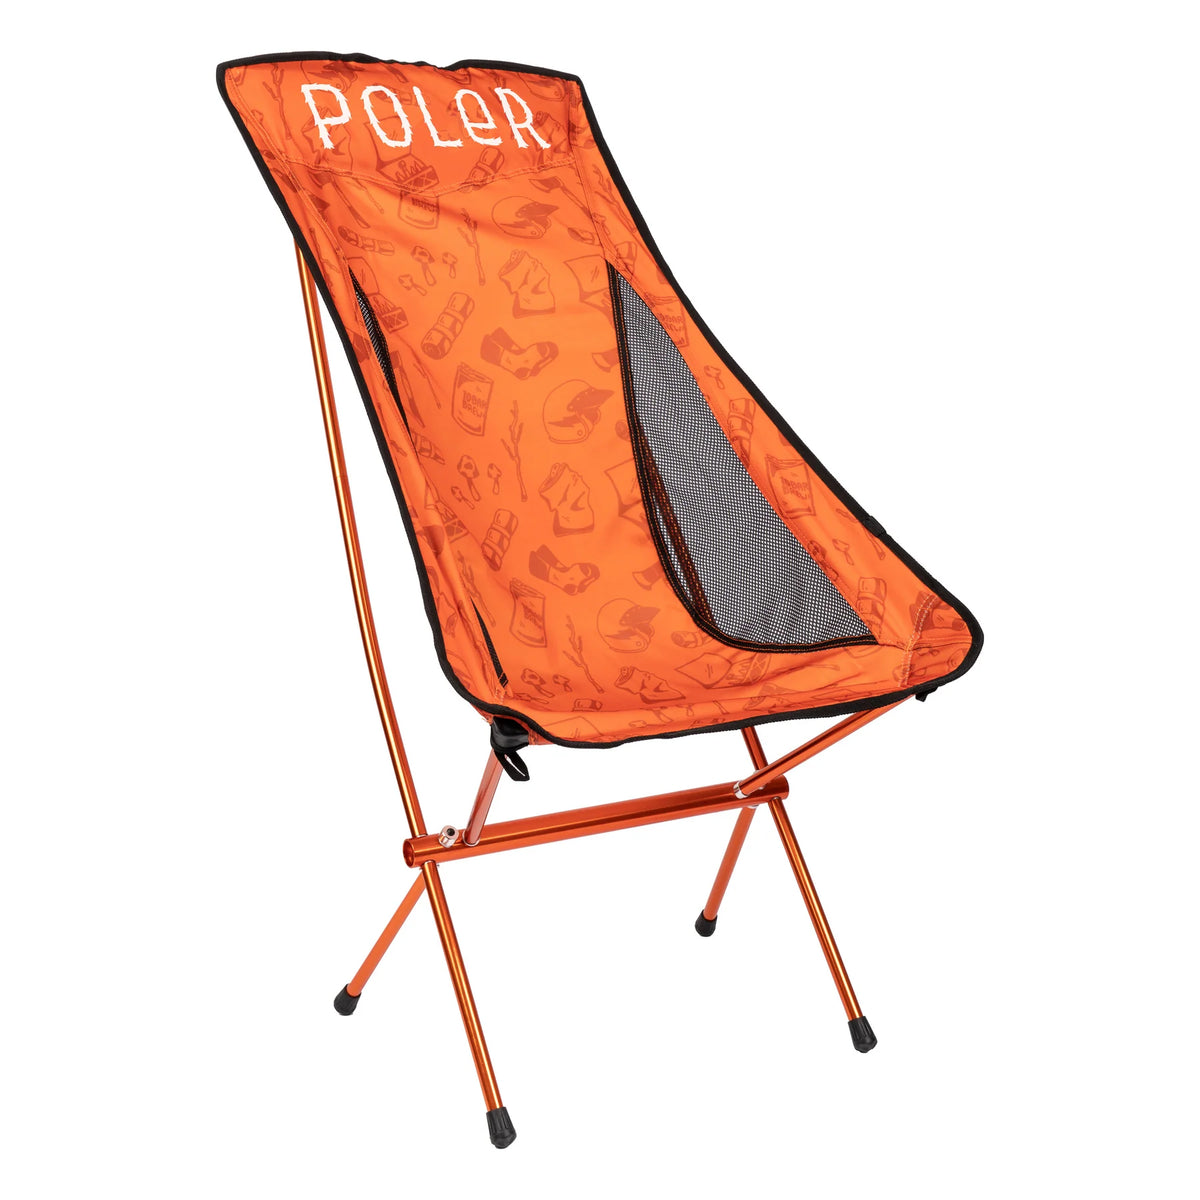 Poler Stowaway Chair – Doug's Hood River